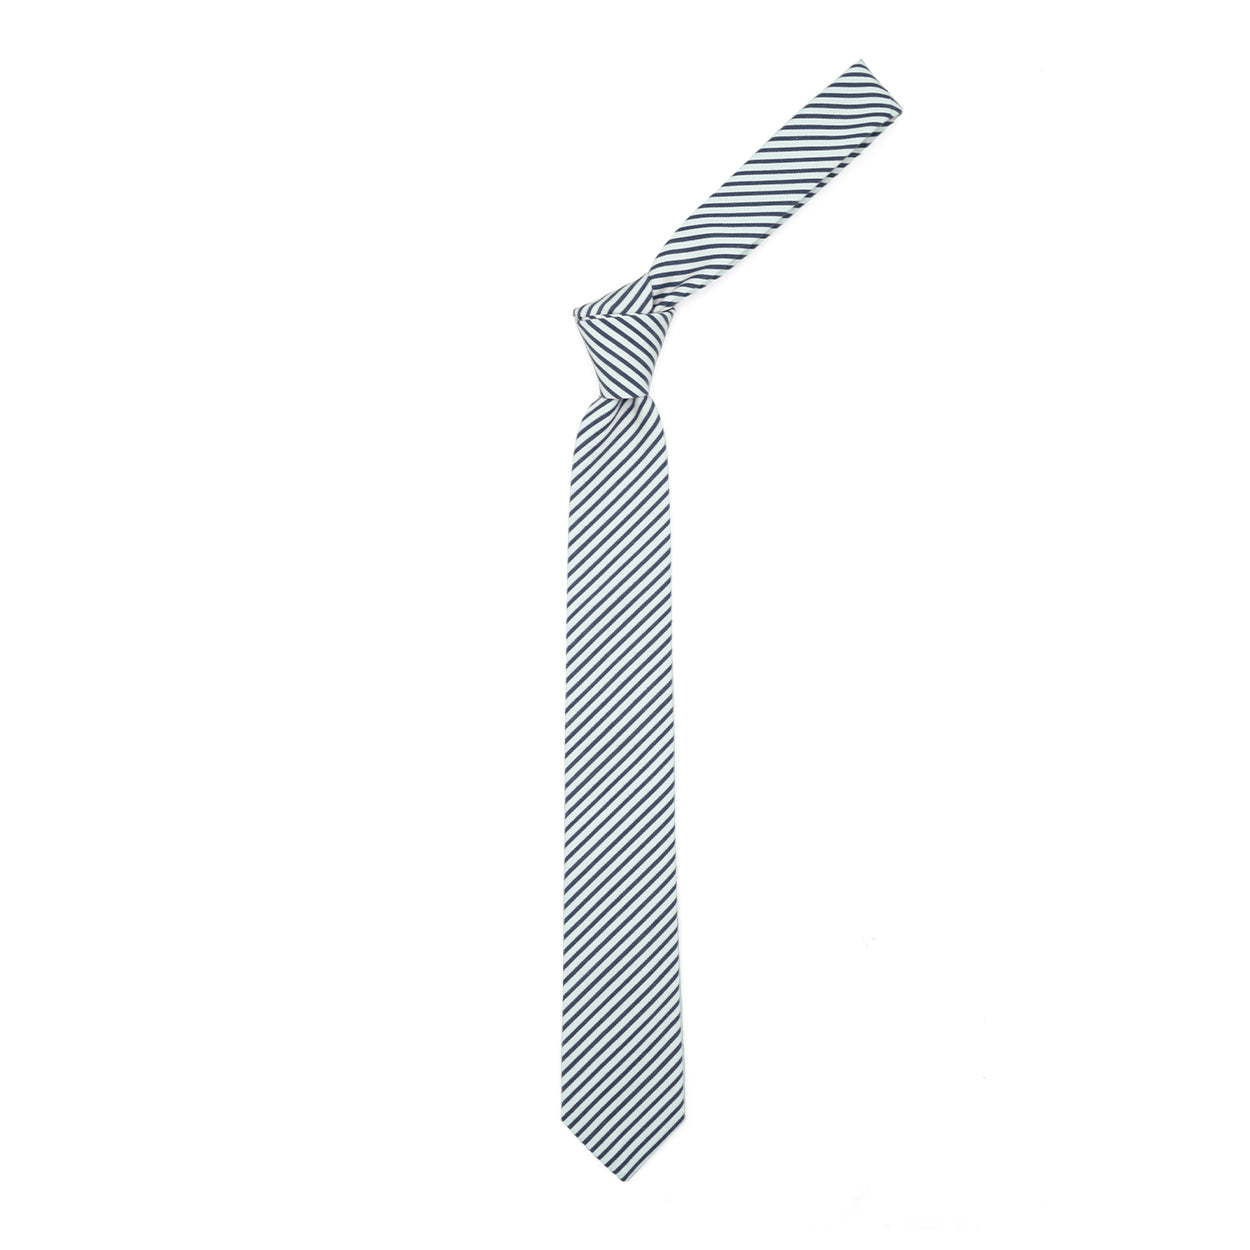 Cream tie with blue stripes